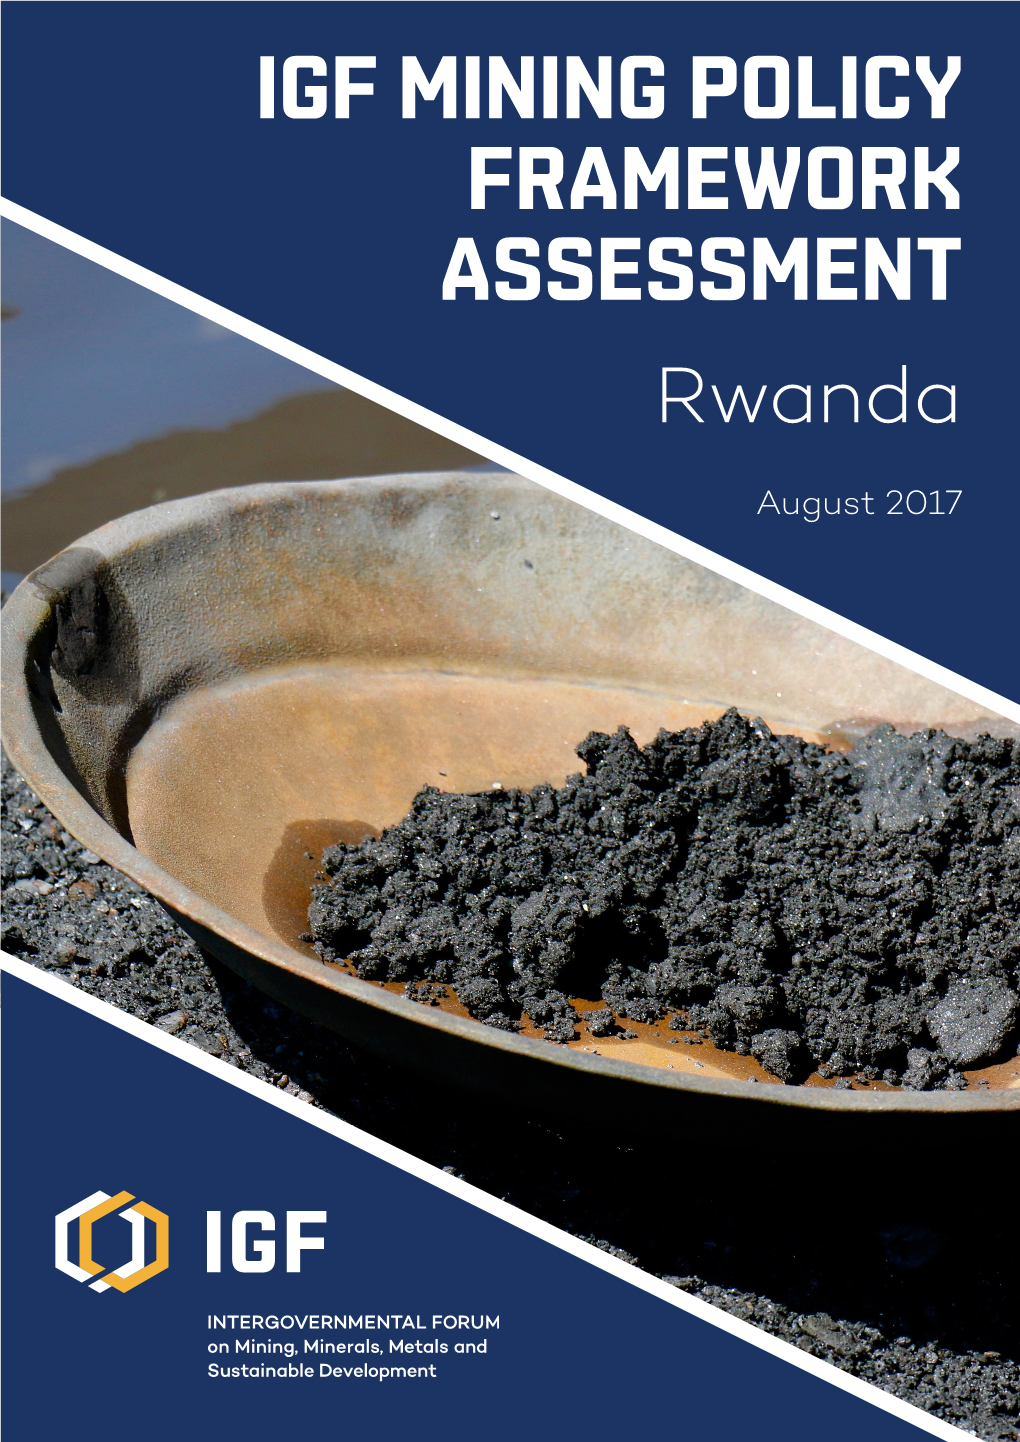 IGF Mining Policy Framework Assessment: Rwanda